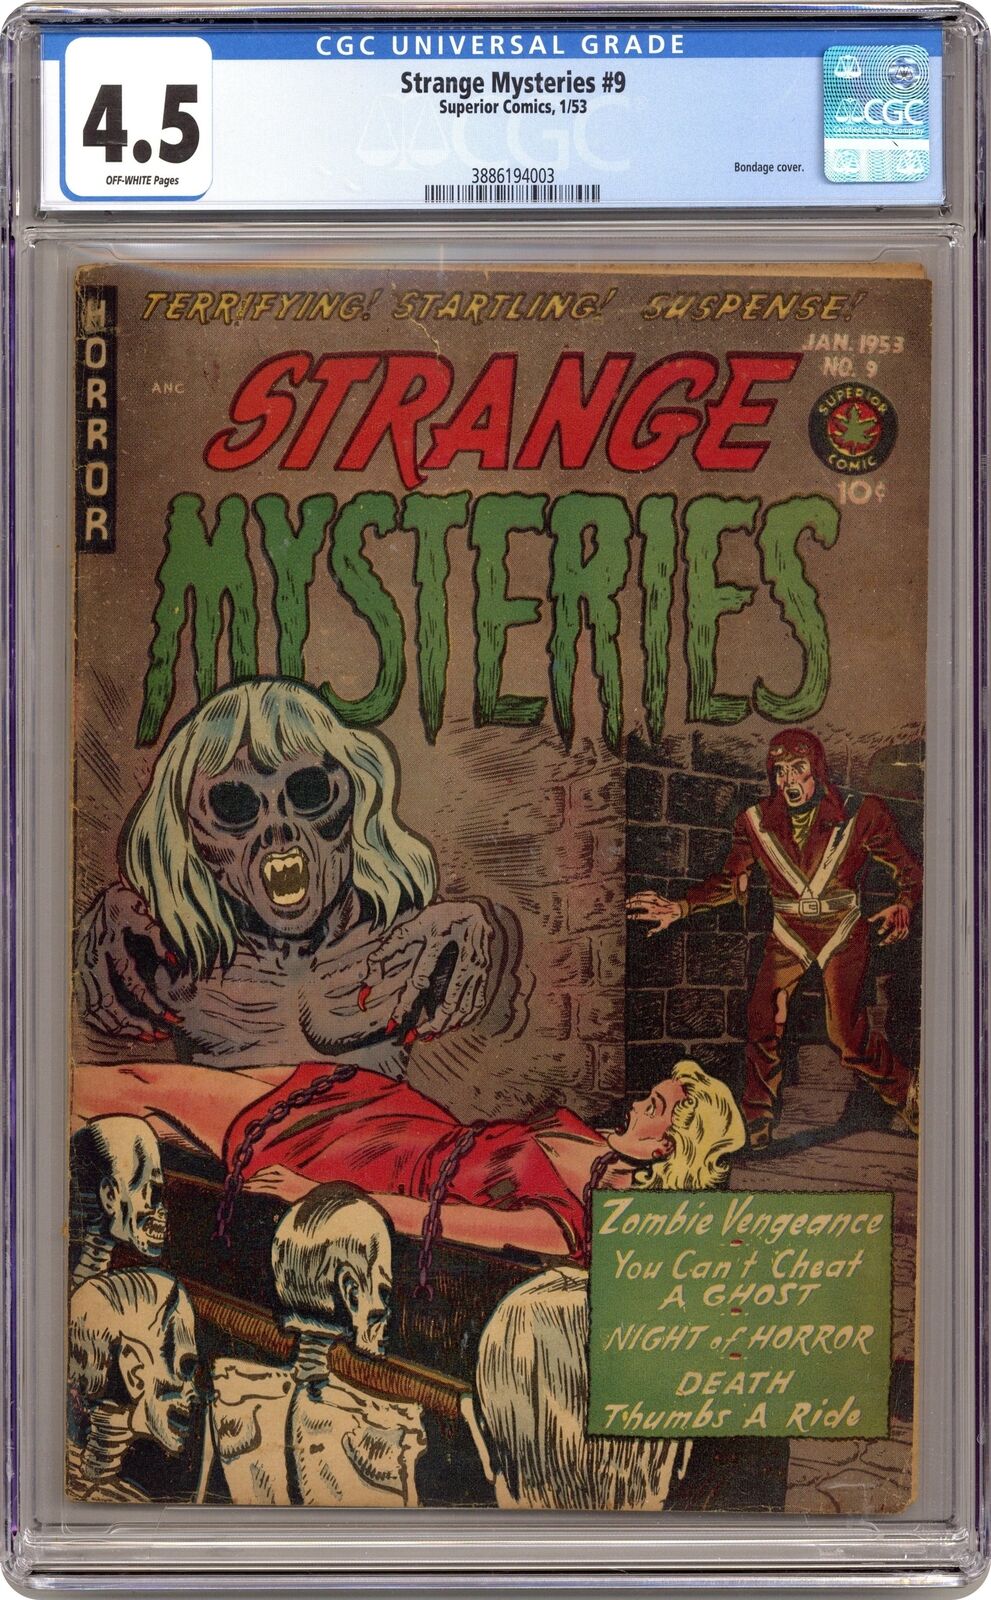 Strange Mysteries #9 CGC 4.5 1953 3886194003